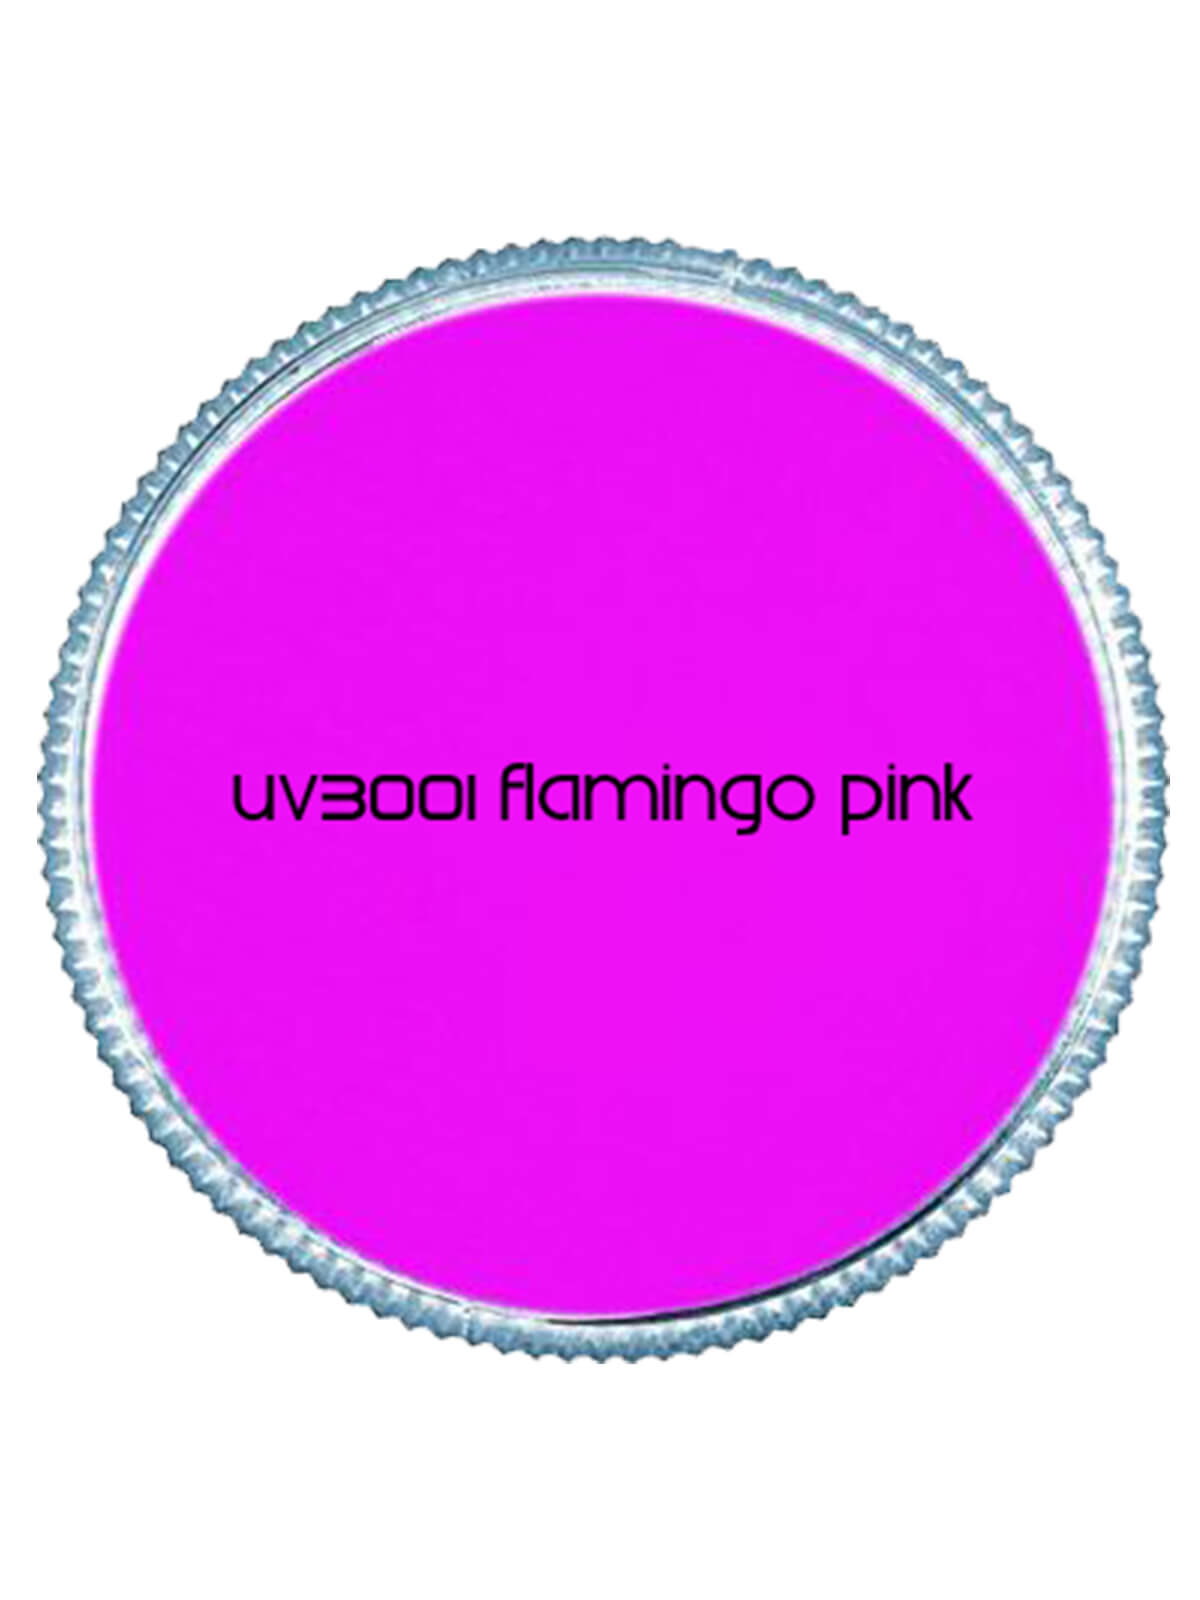 UV Palette containing 6 UV & day glow colours.  Colours include Neon Foxy Orange, Neon Pink Flamingo, Neon Toxic Yellow, Neon Kryptonite Green, Super Nova & Abyss.